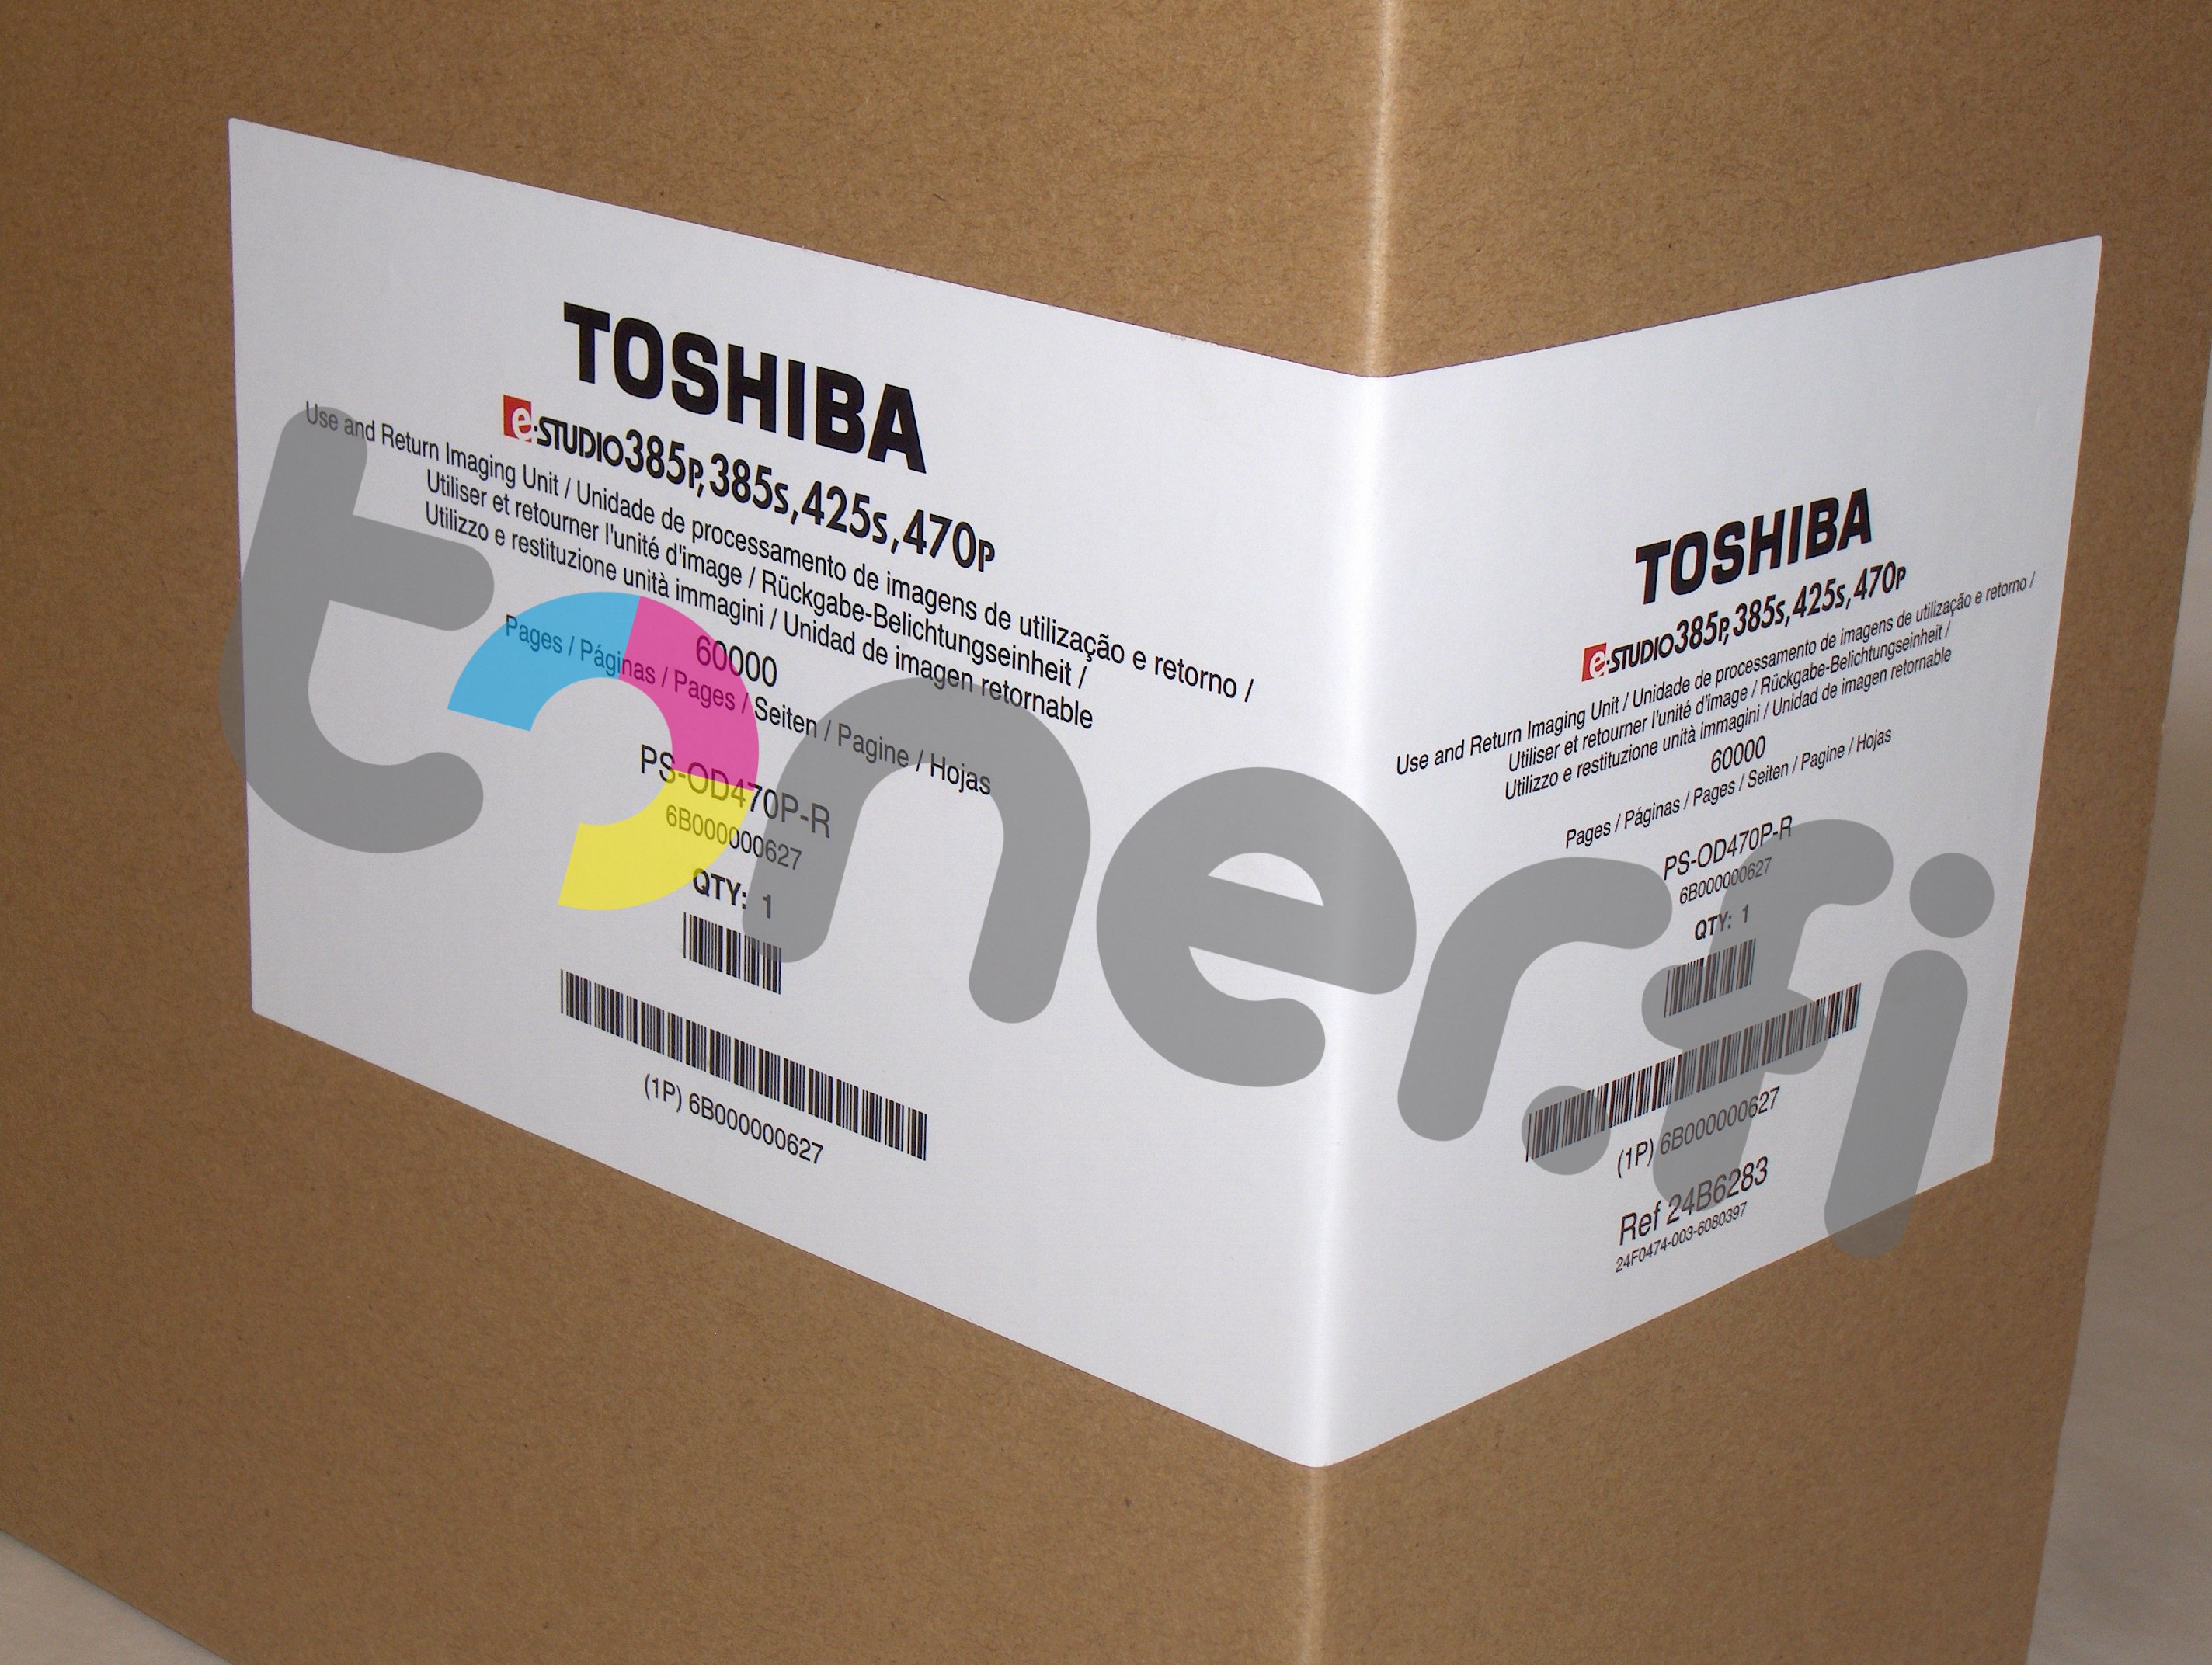 Toshiba OD-470P-R Imaging Yksikkö